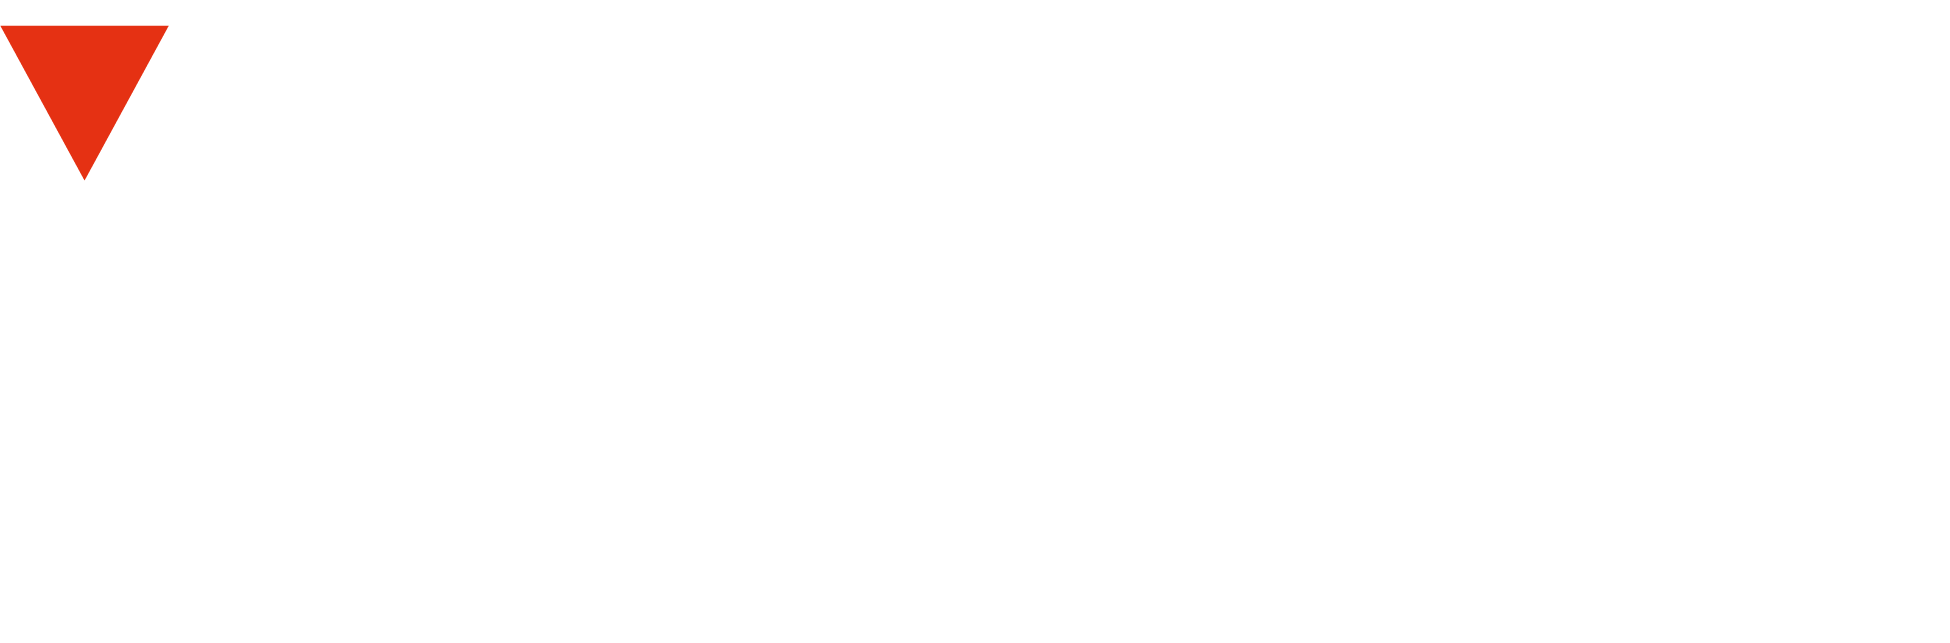 ISDM logo